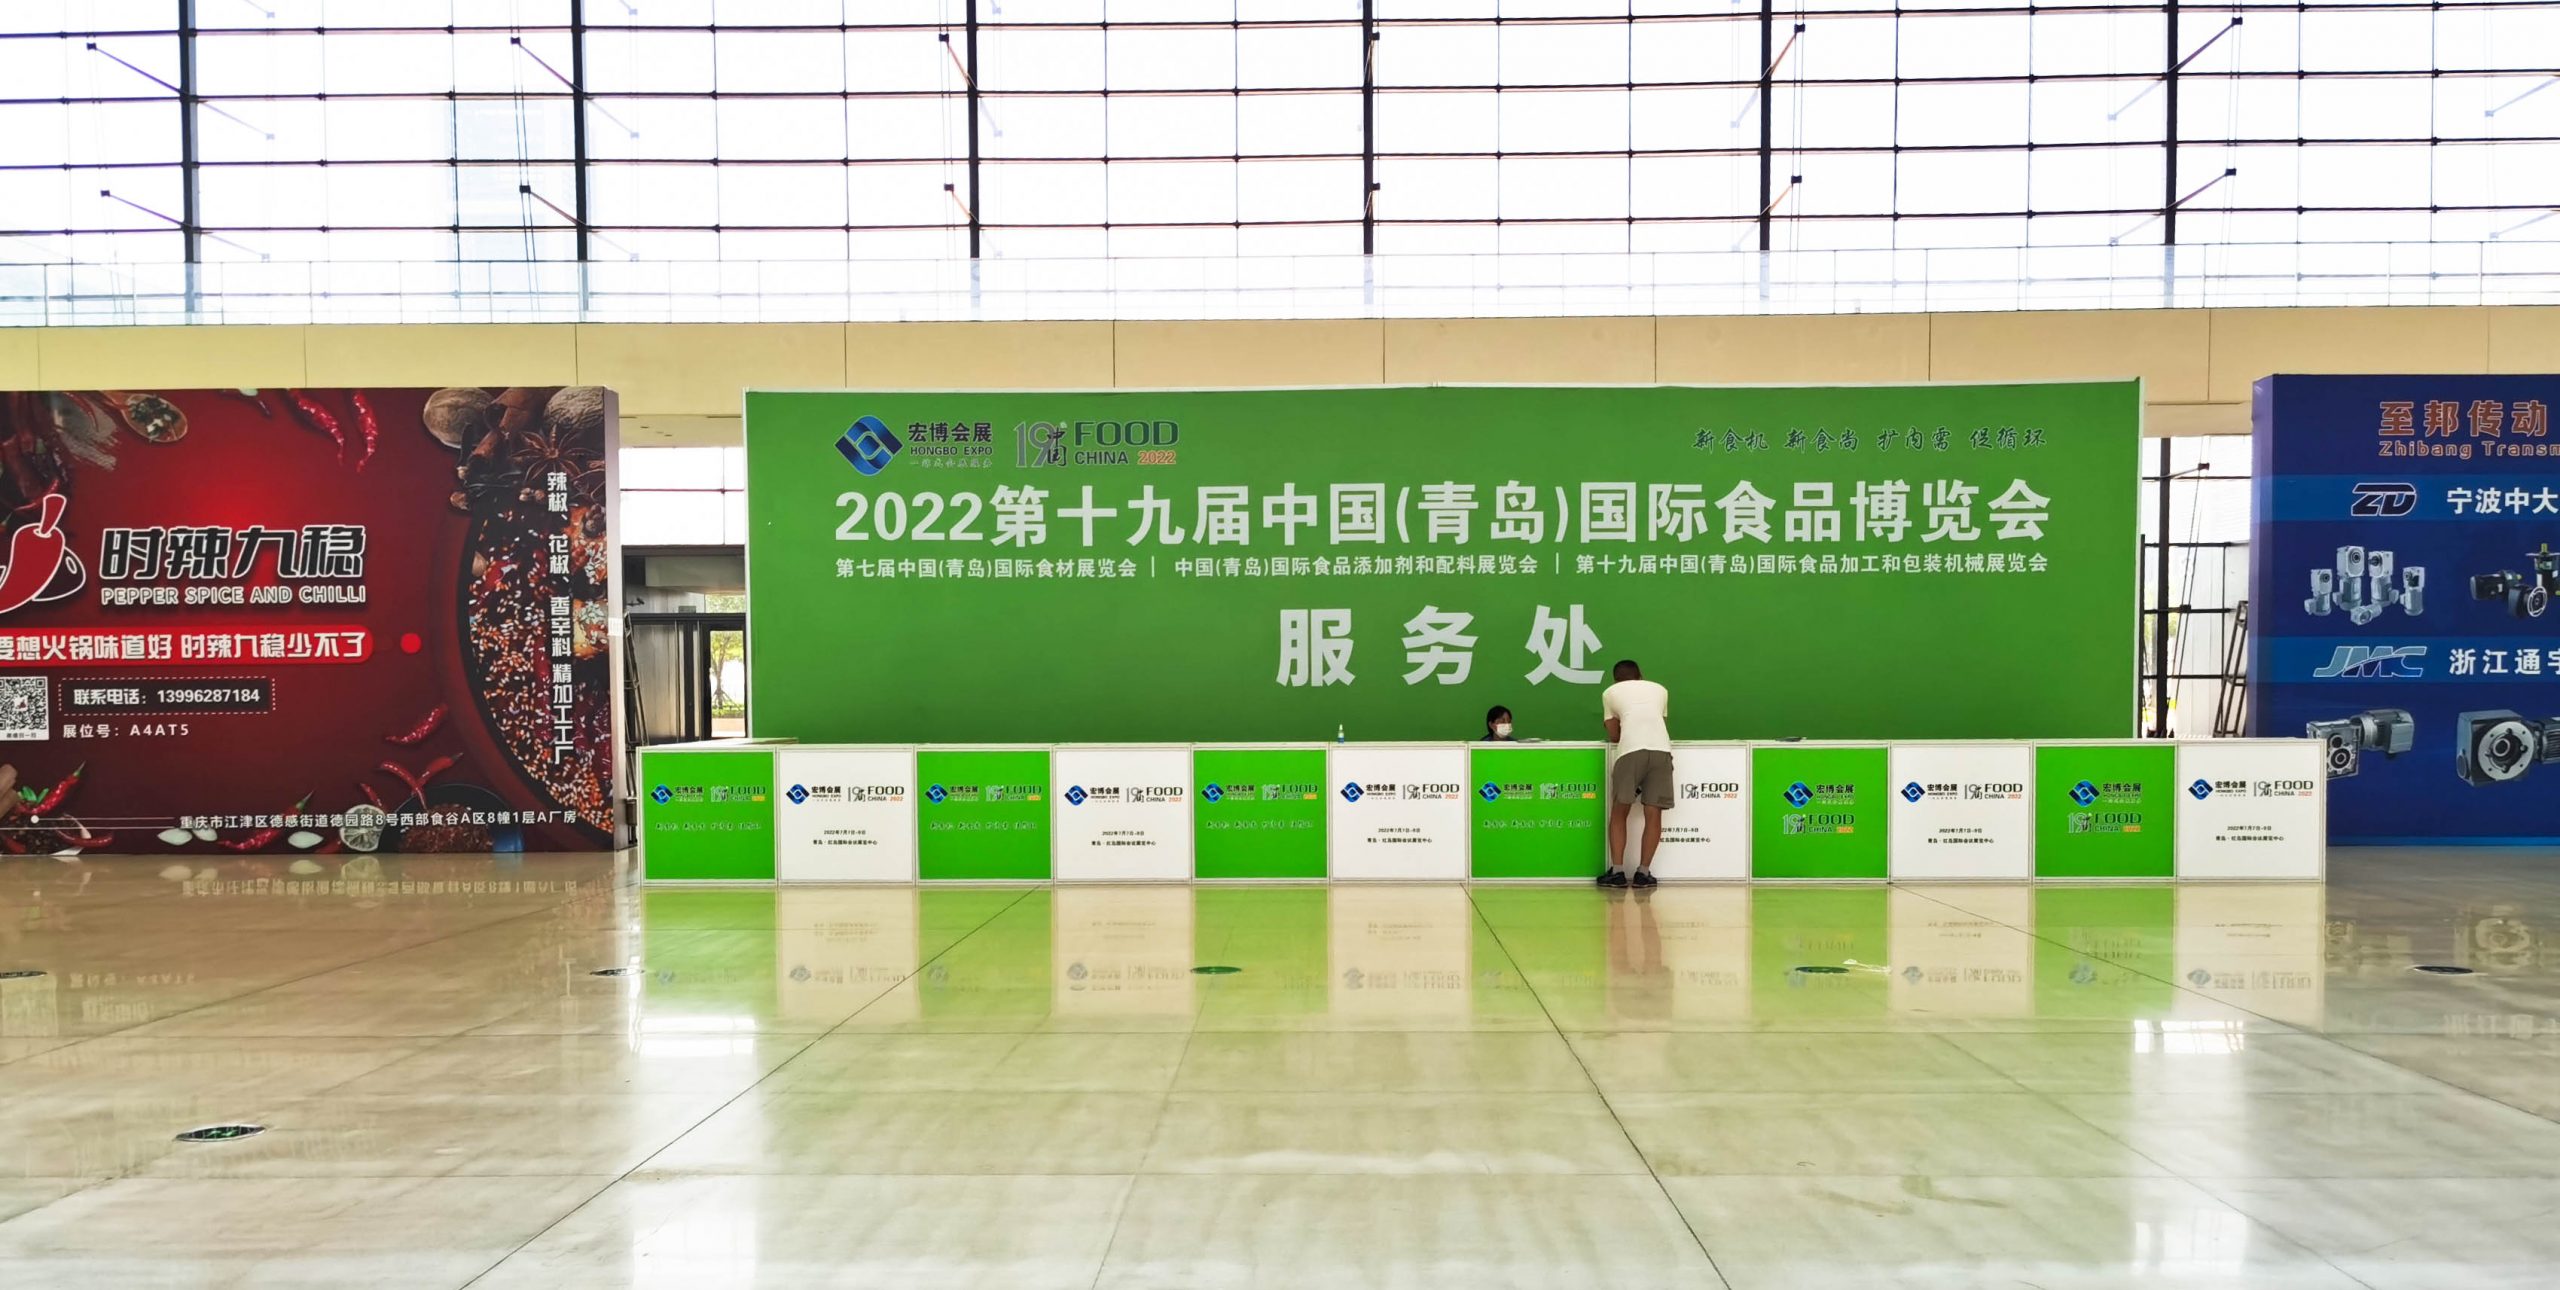 The 19th China Qingdao International Food Expo